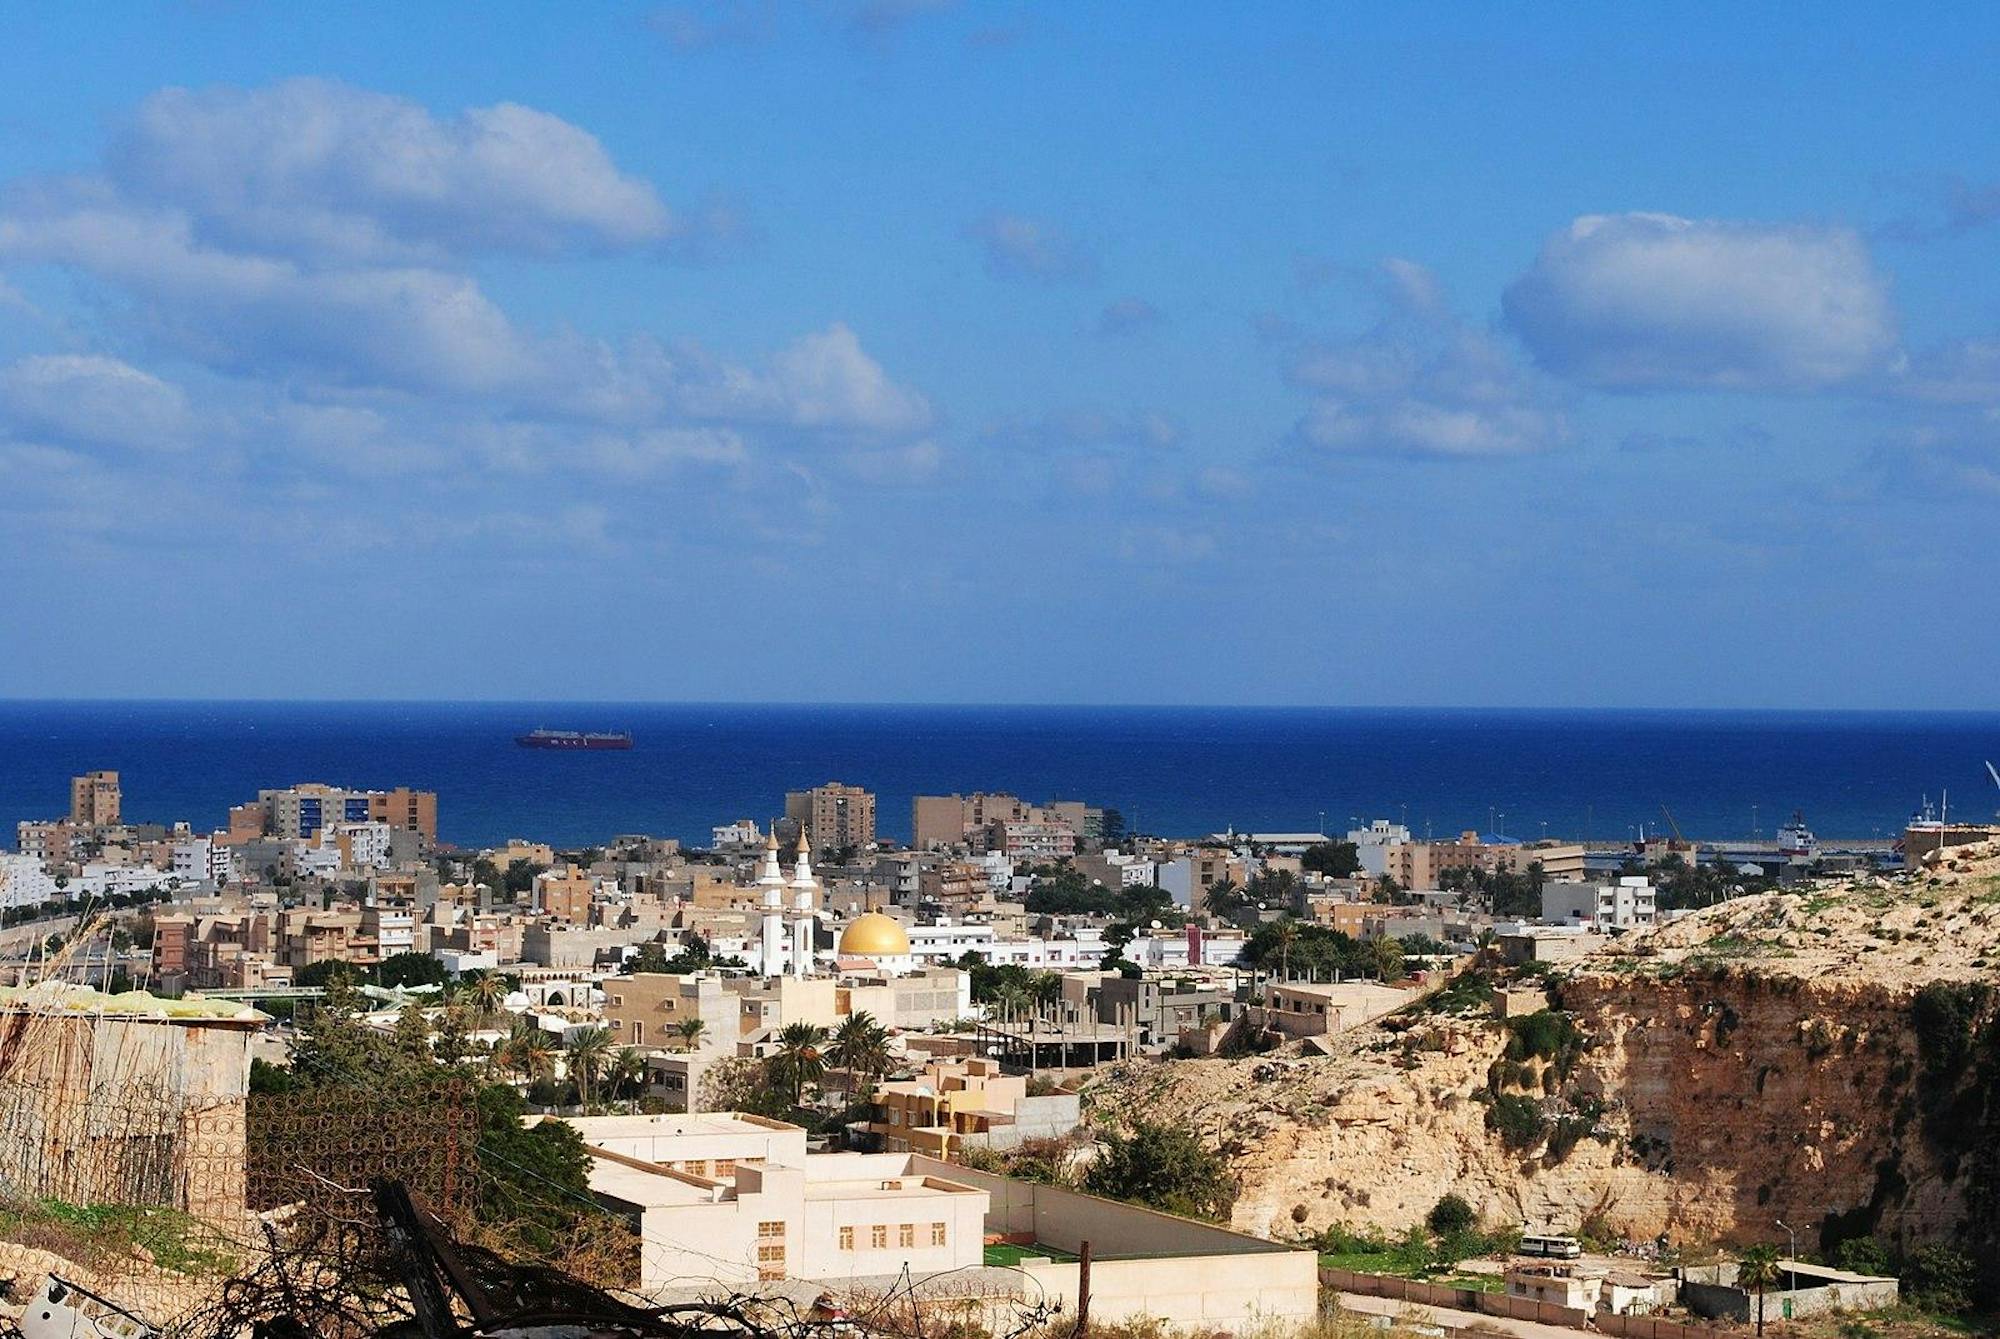 City of Derna, Libya, is pictured.